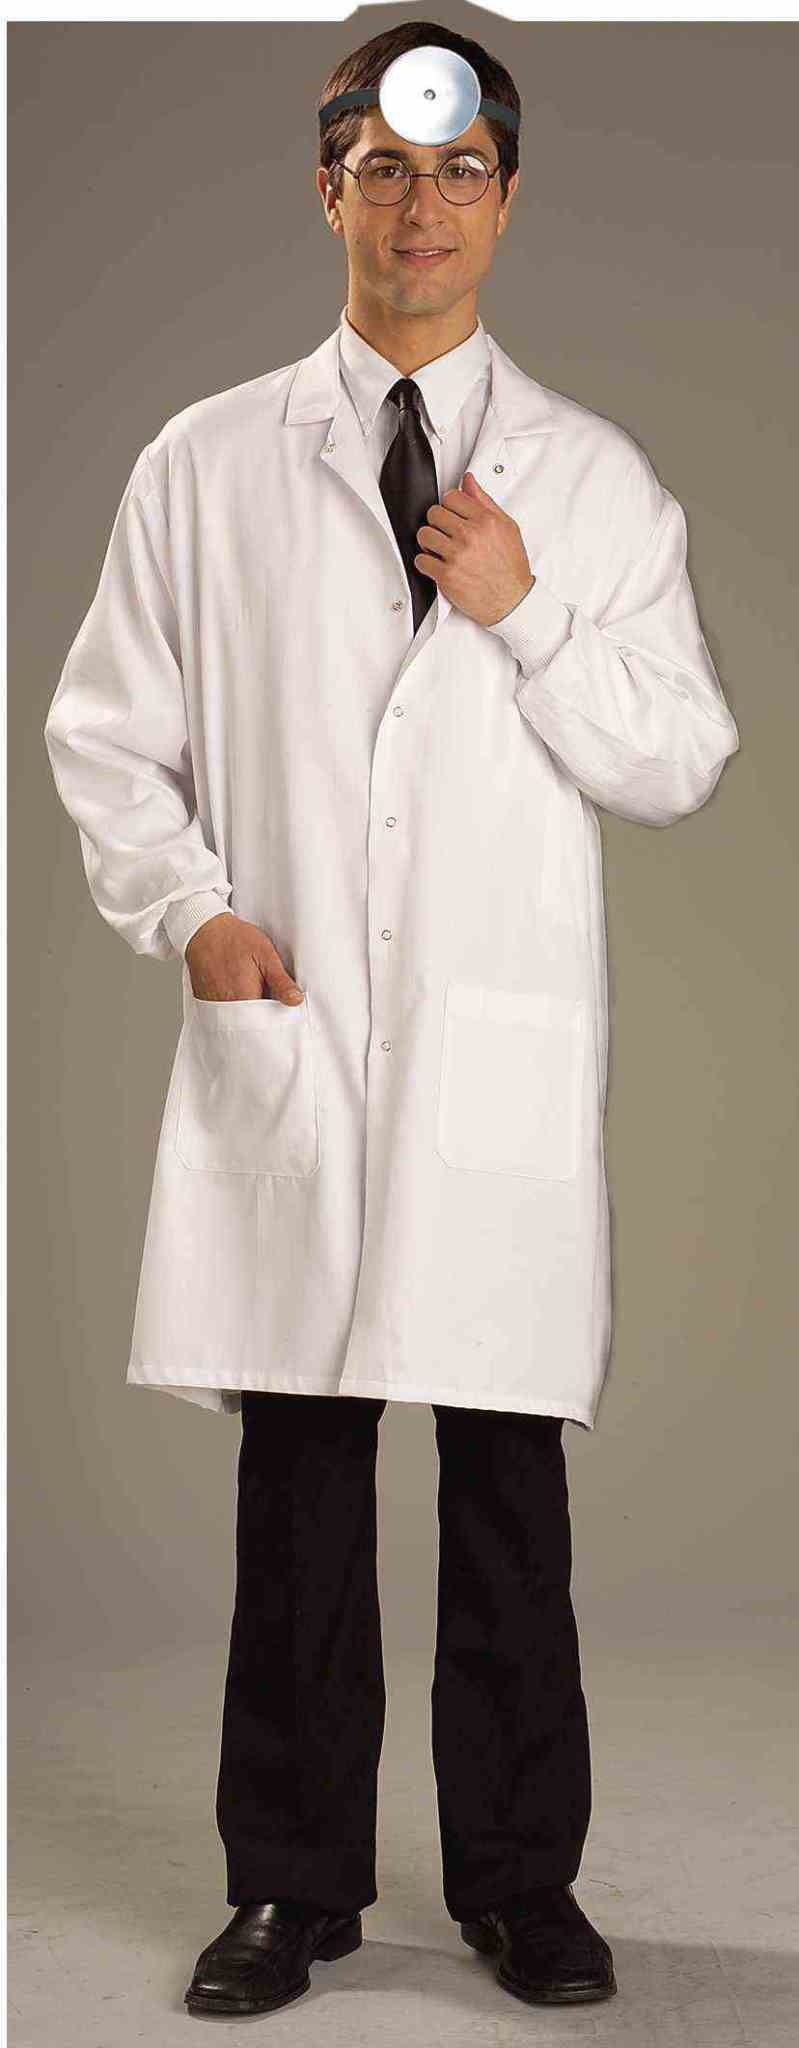 Adult Doctor Lab Coat